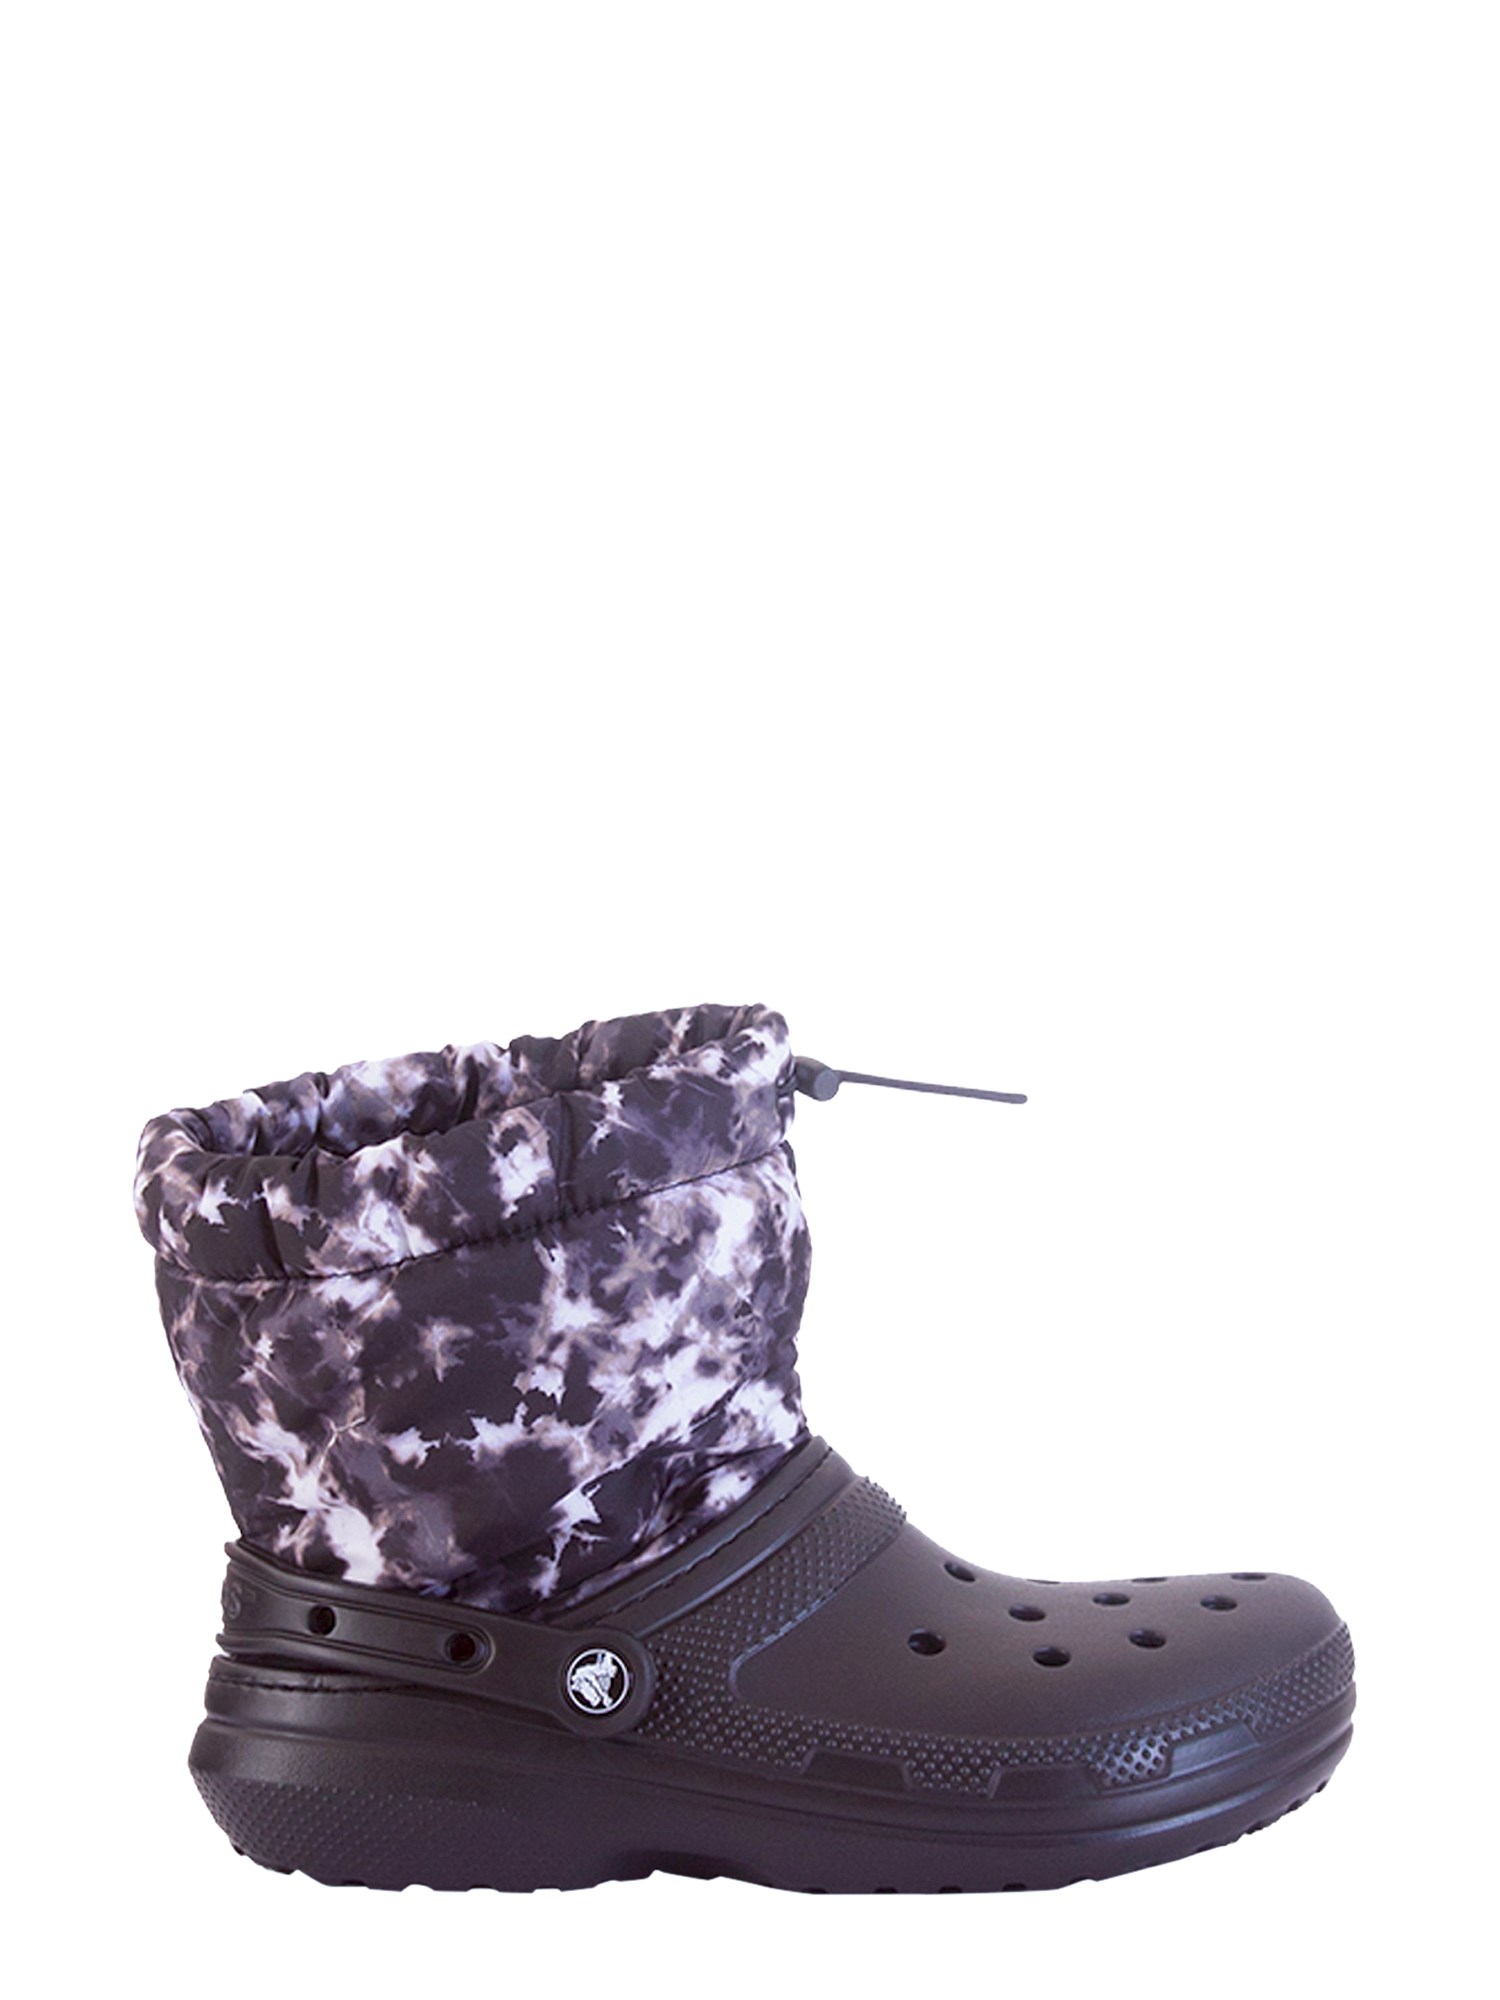 Crocs crocs tye dye lined boot